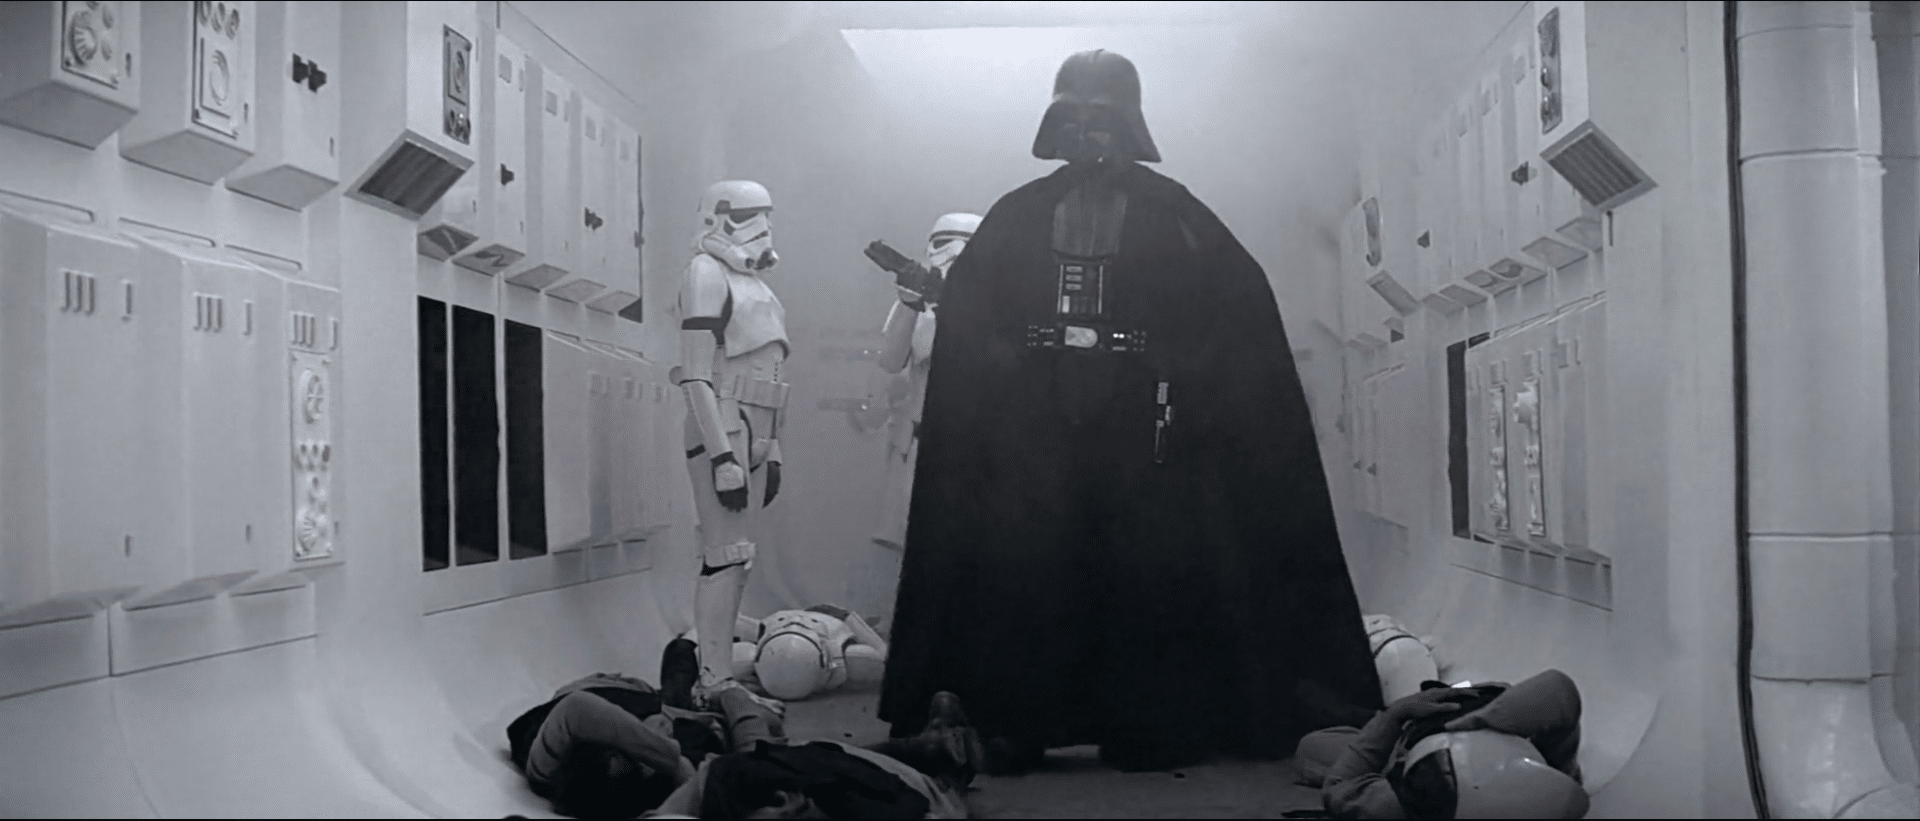 Star Wars Darth Vader Enters